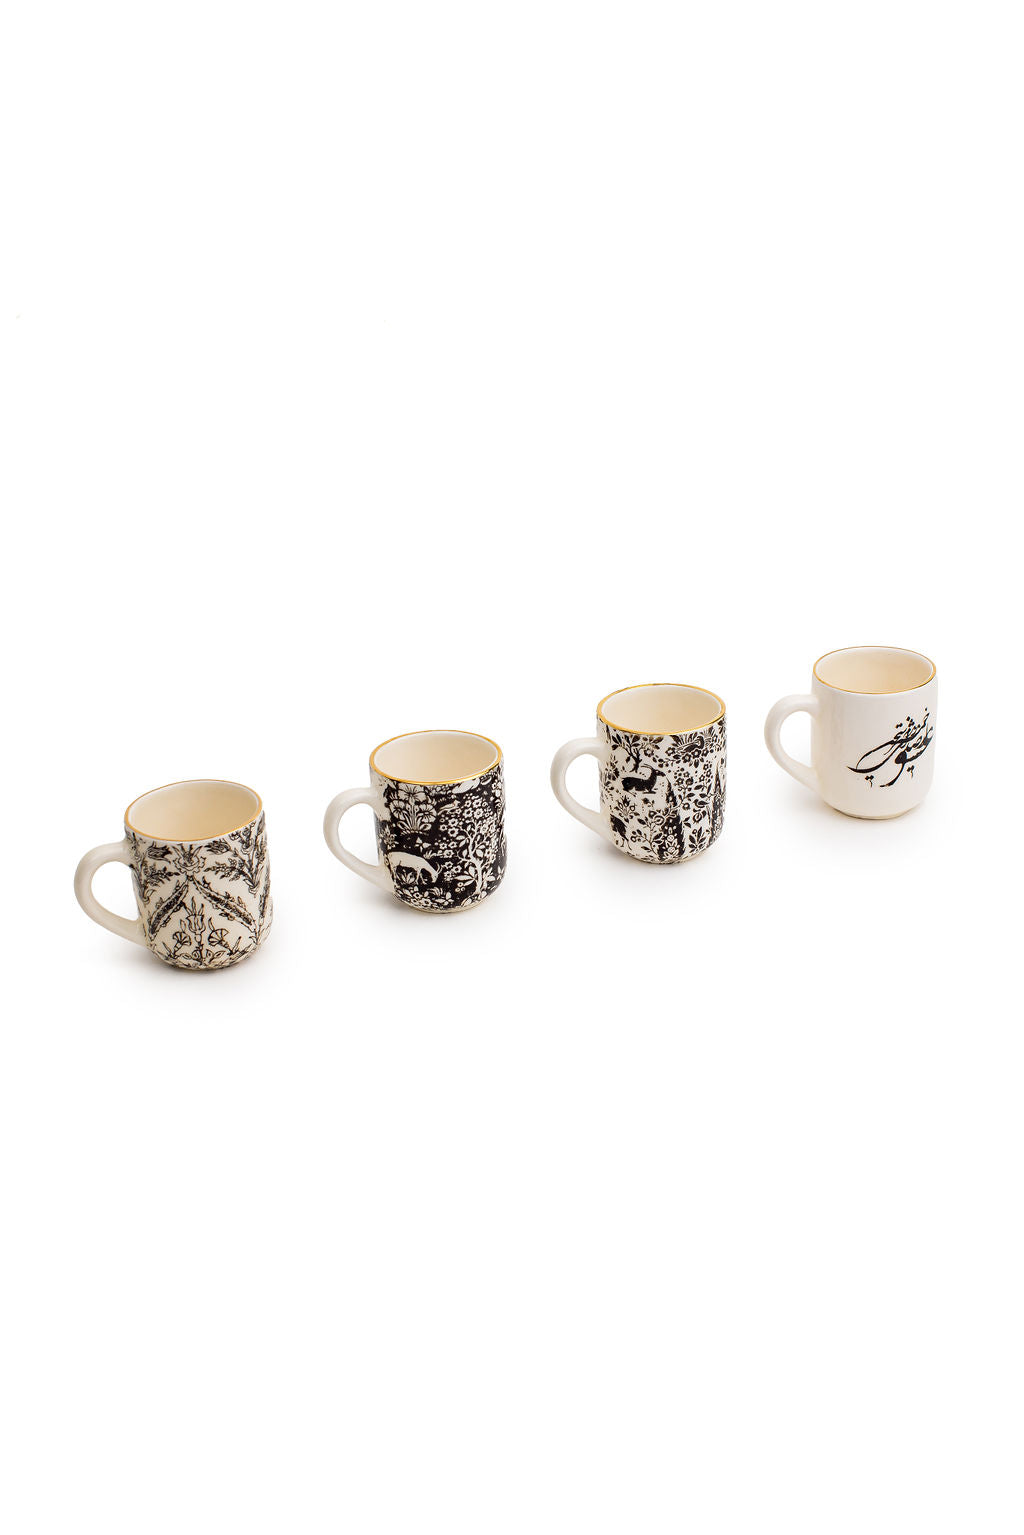 Ceramic Mugs with Black And White Print